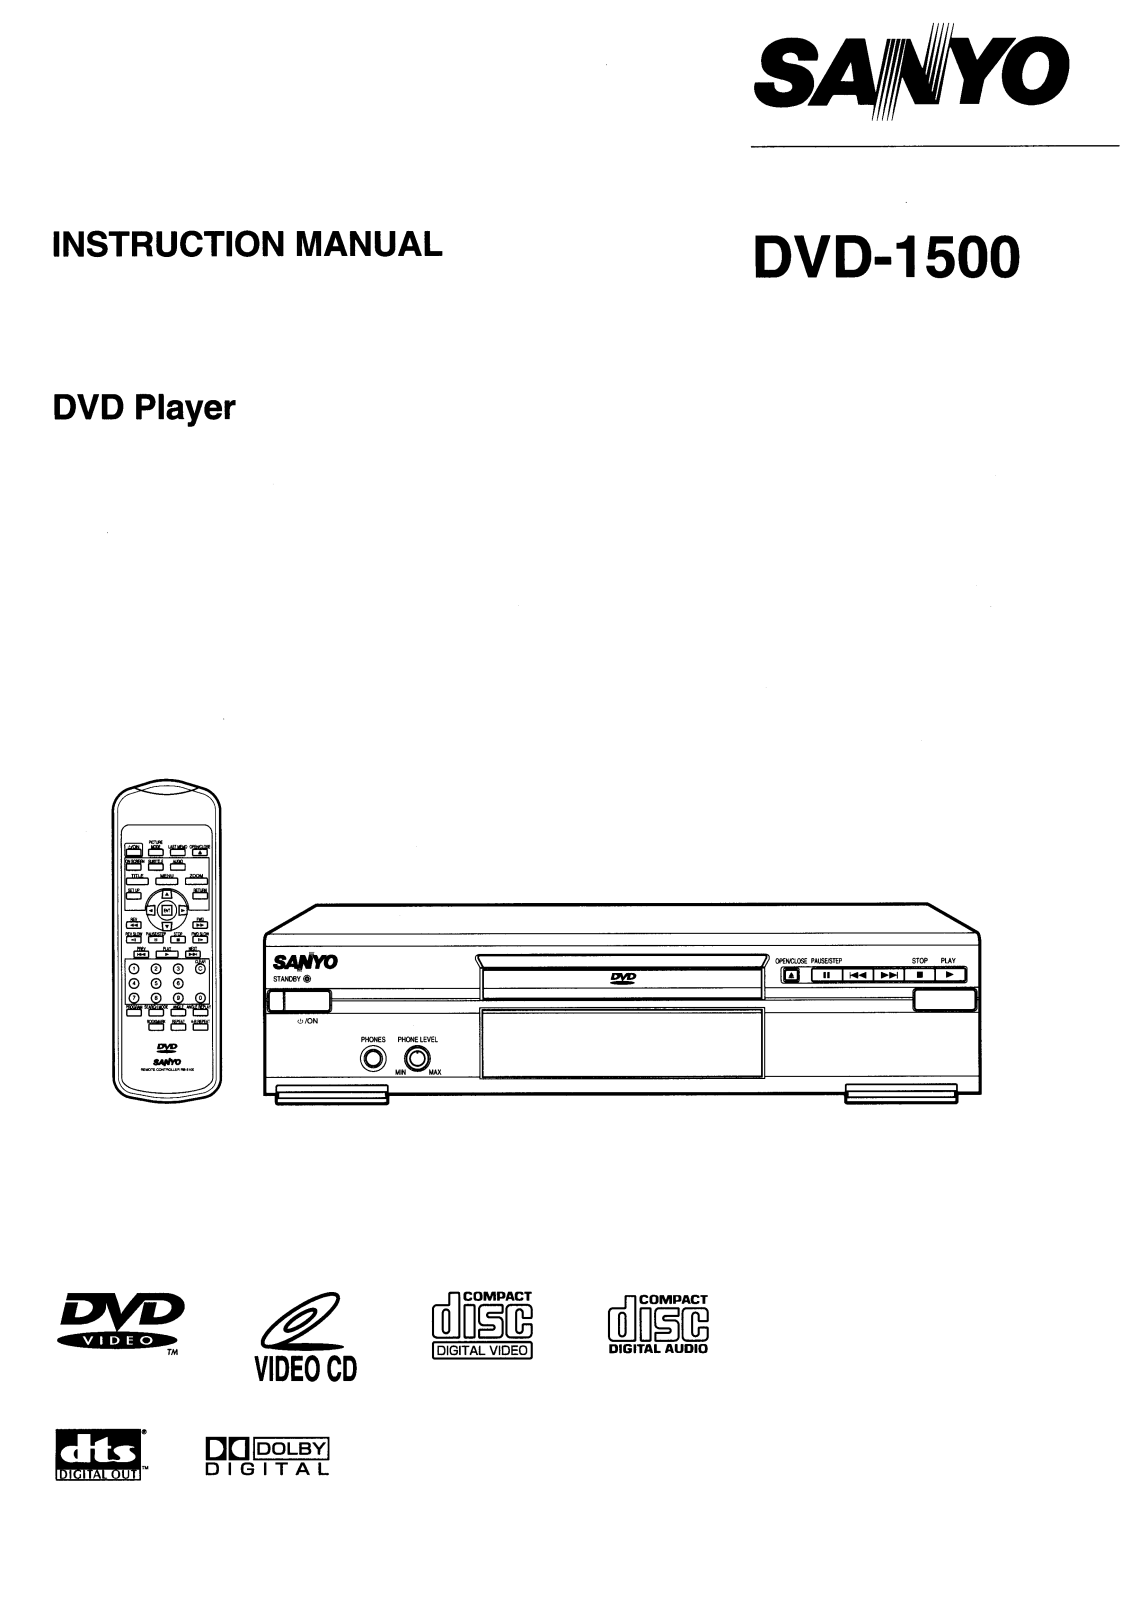 Sanyo DVD-1500 Instruction Manual